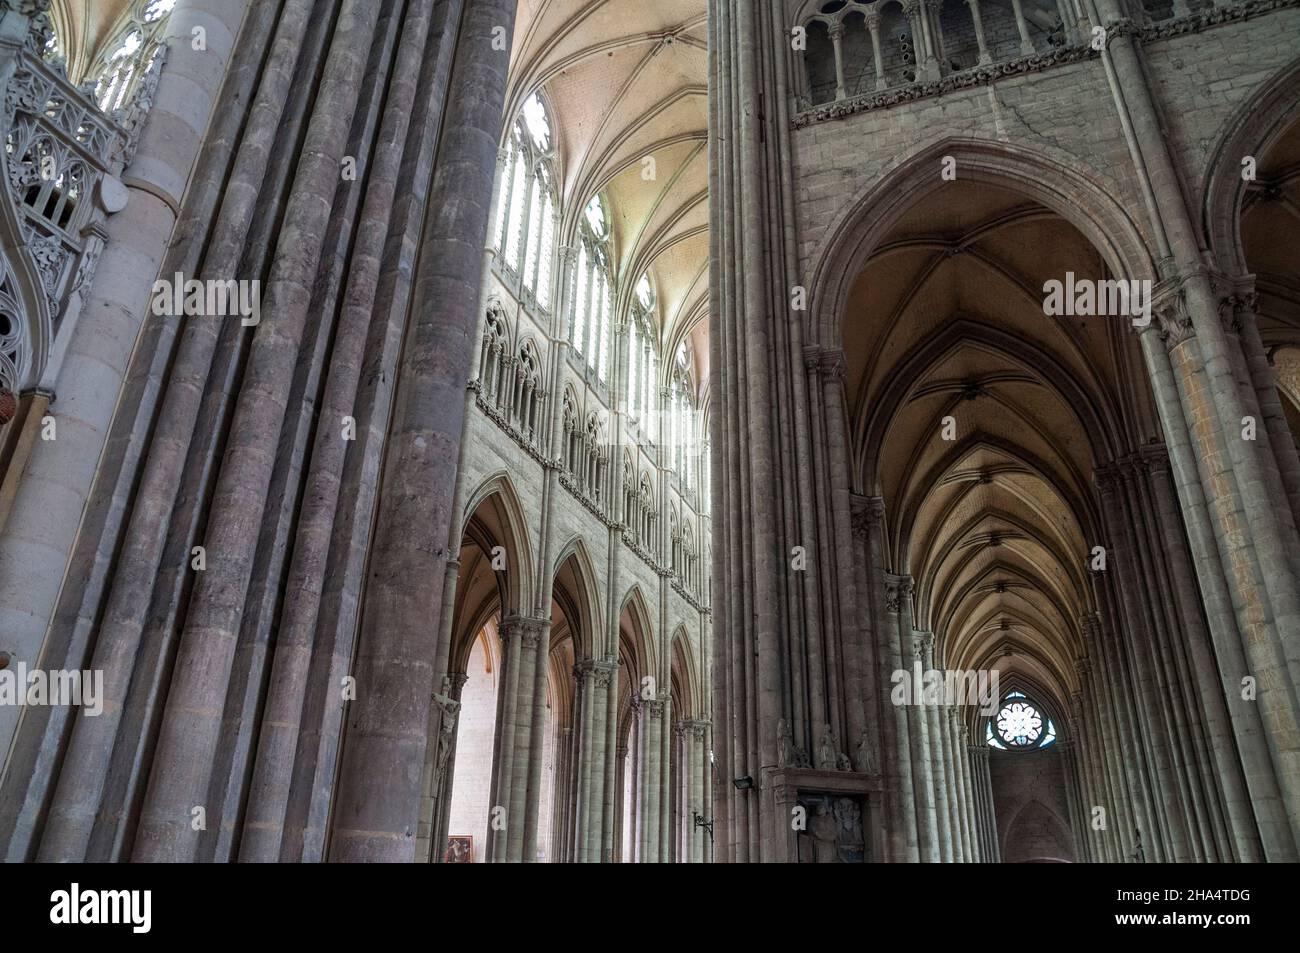 La nef de la cathédrale Notre Dame d'Amiens. The nave of Notre Dame Cathedral in Amiens. Stock Photo